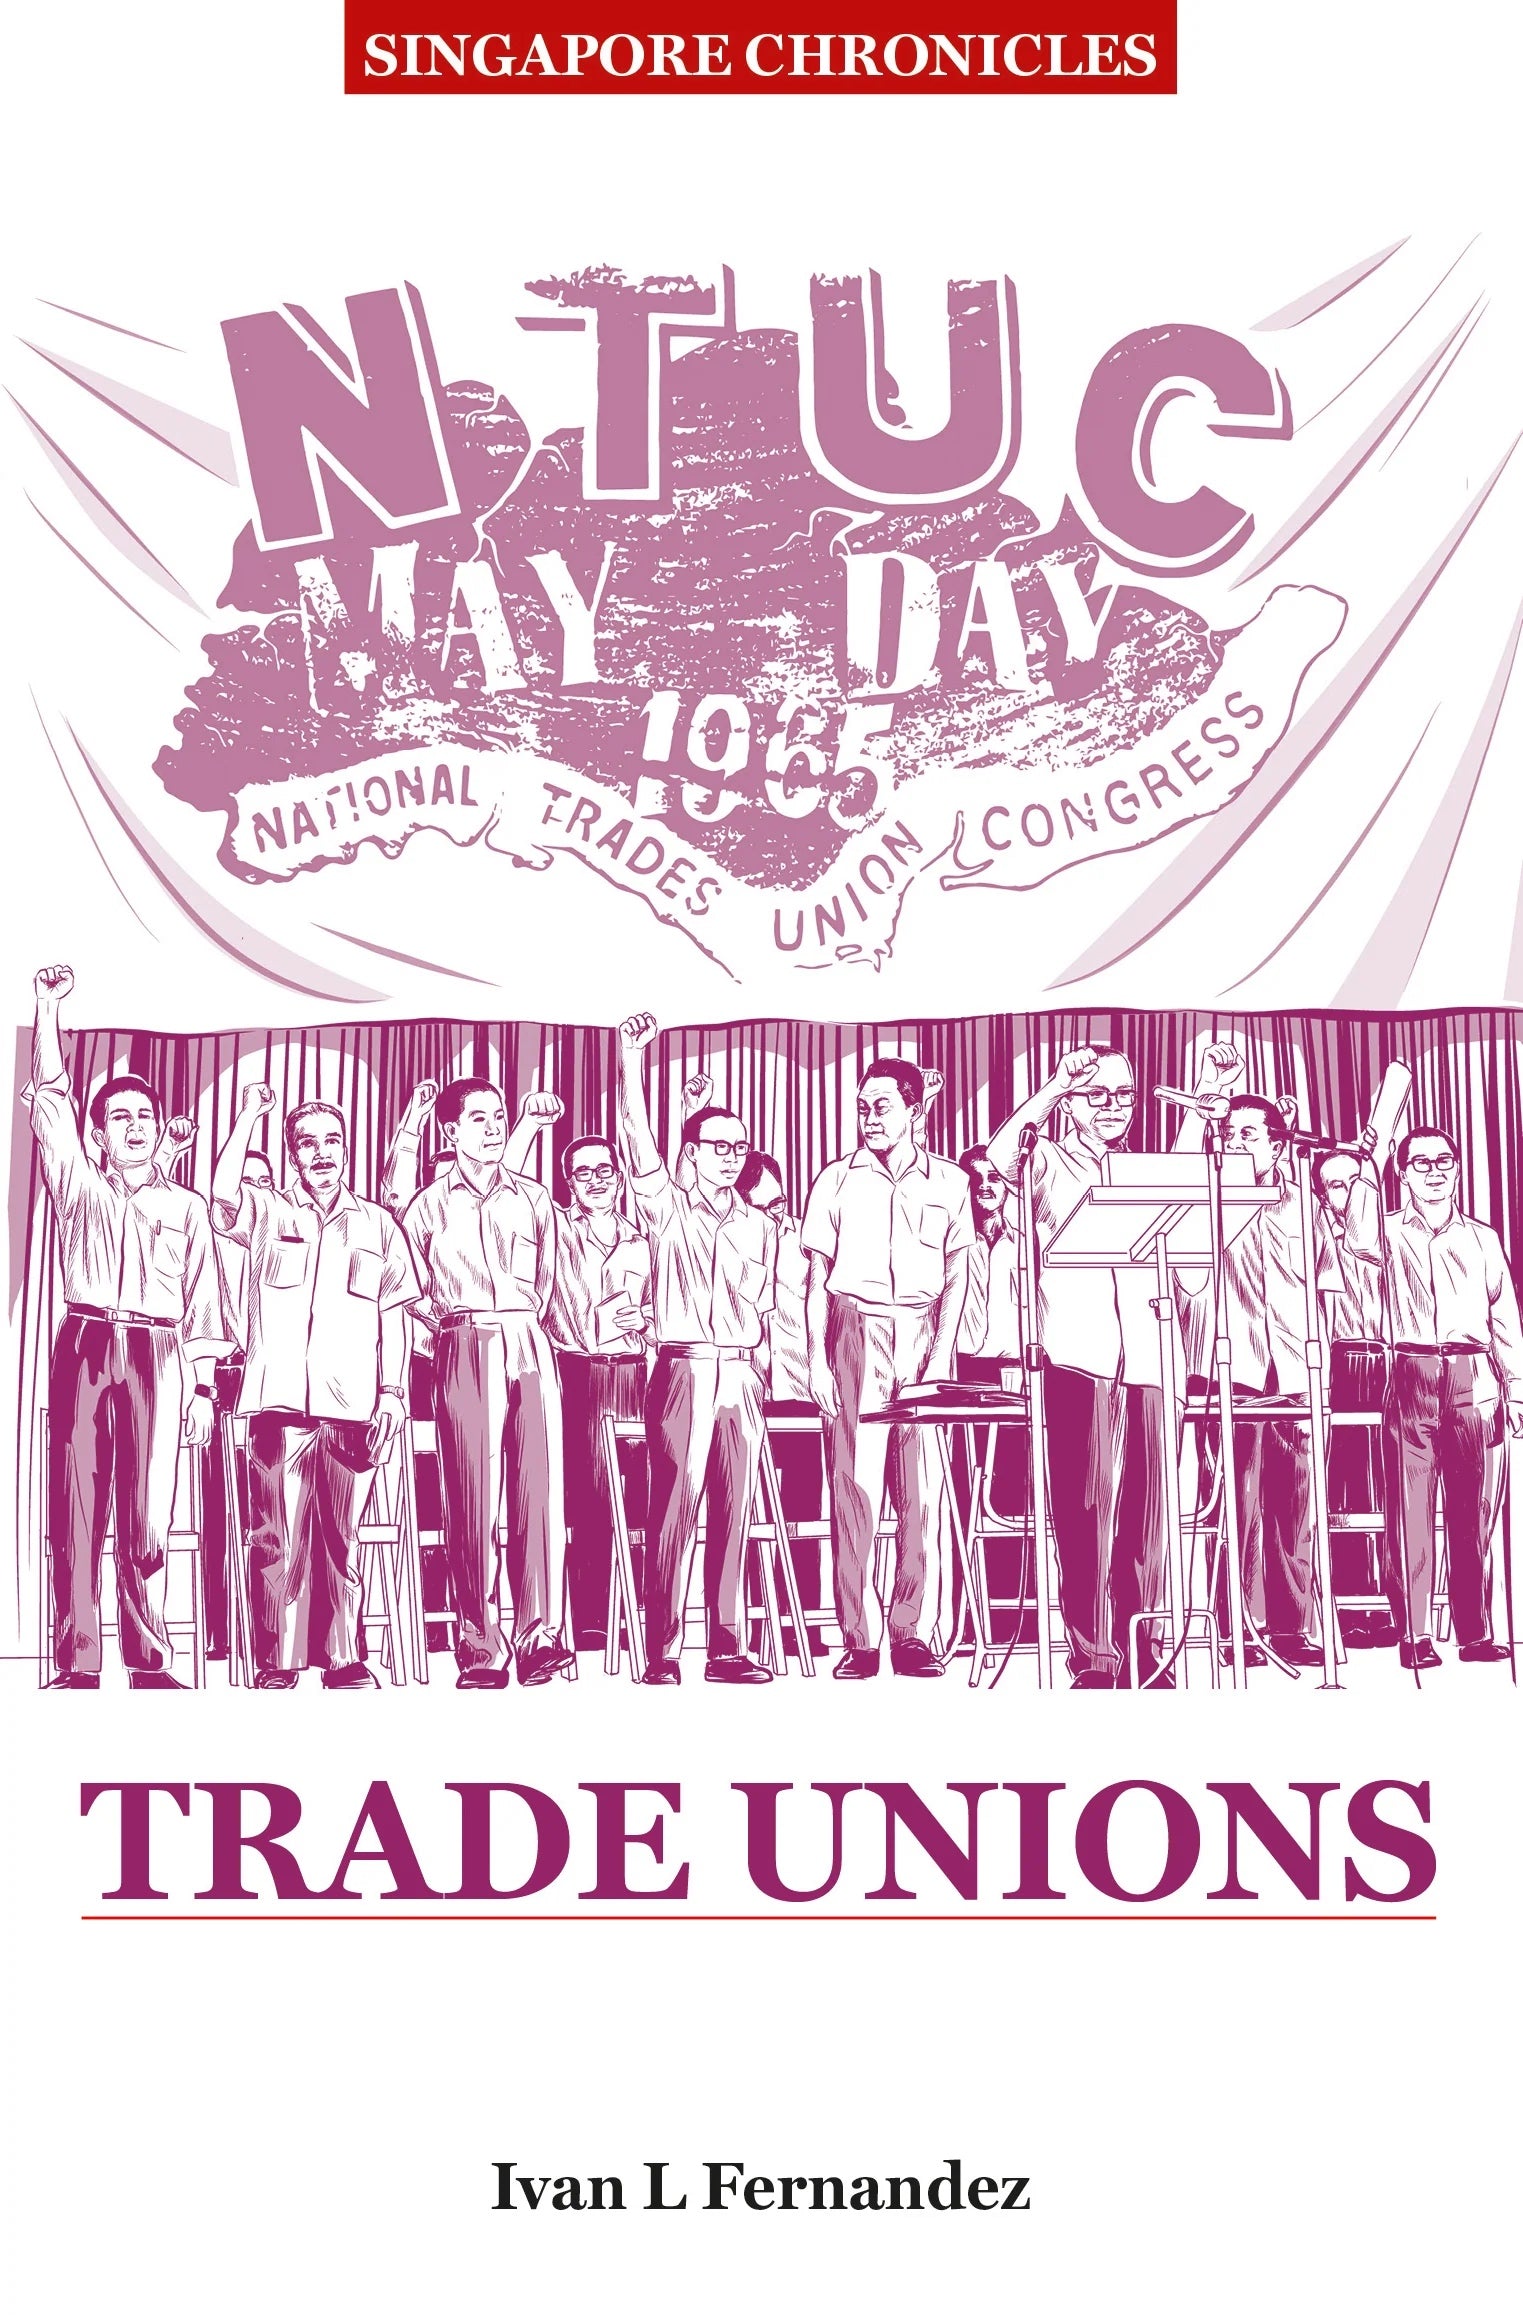 Singapore Chronicles: Trade Unions